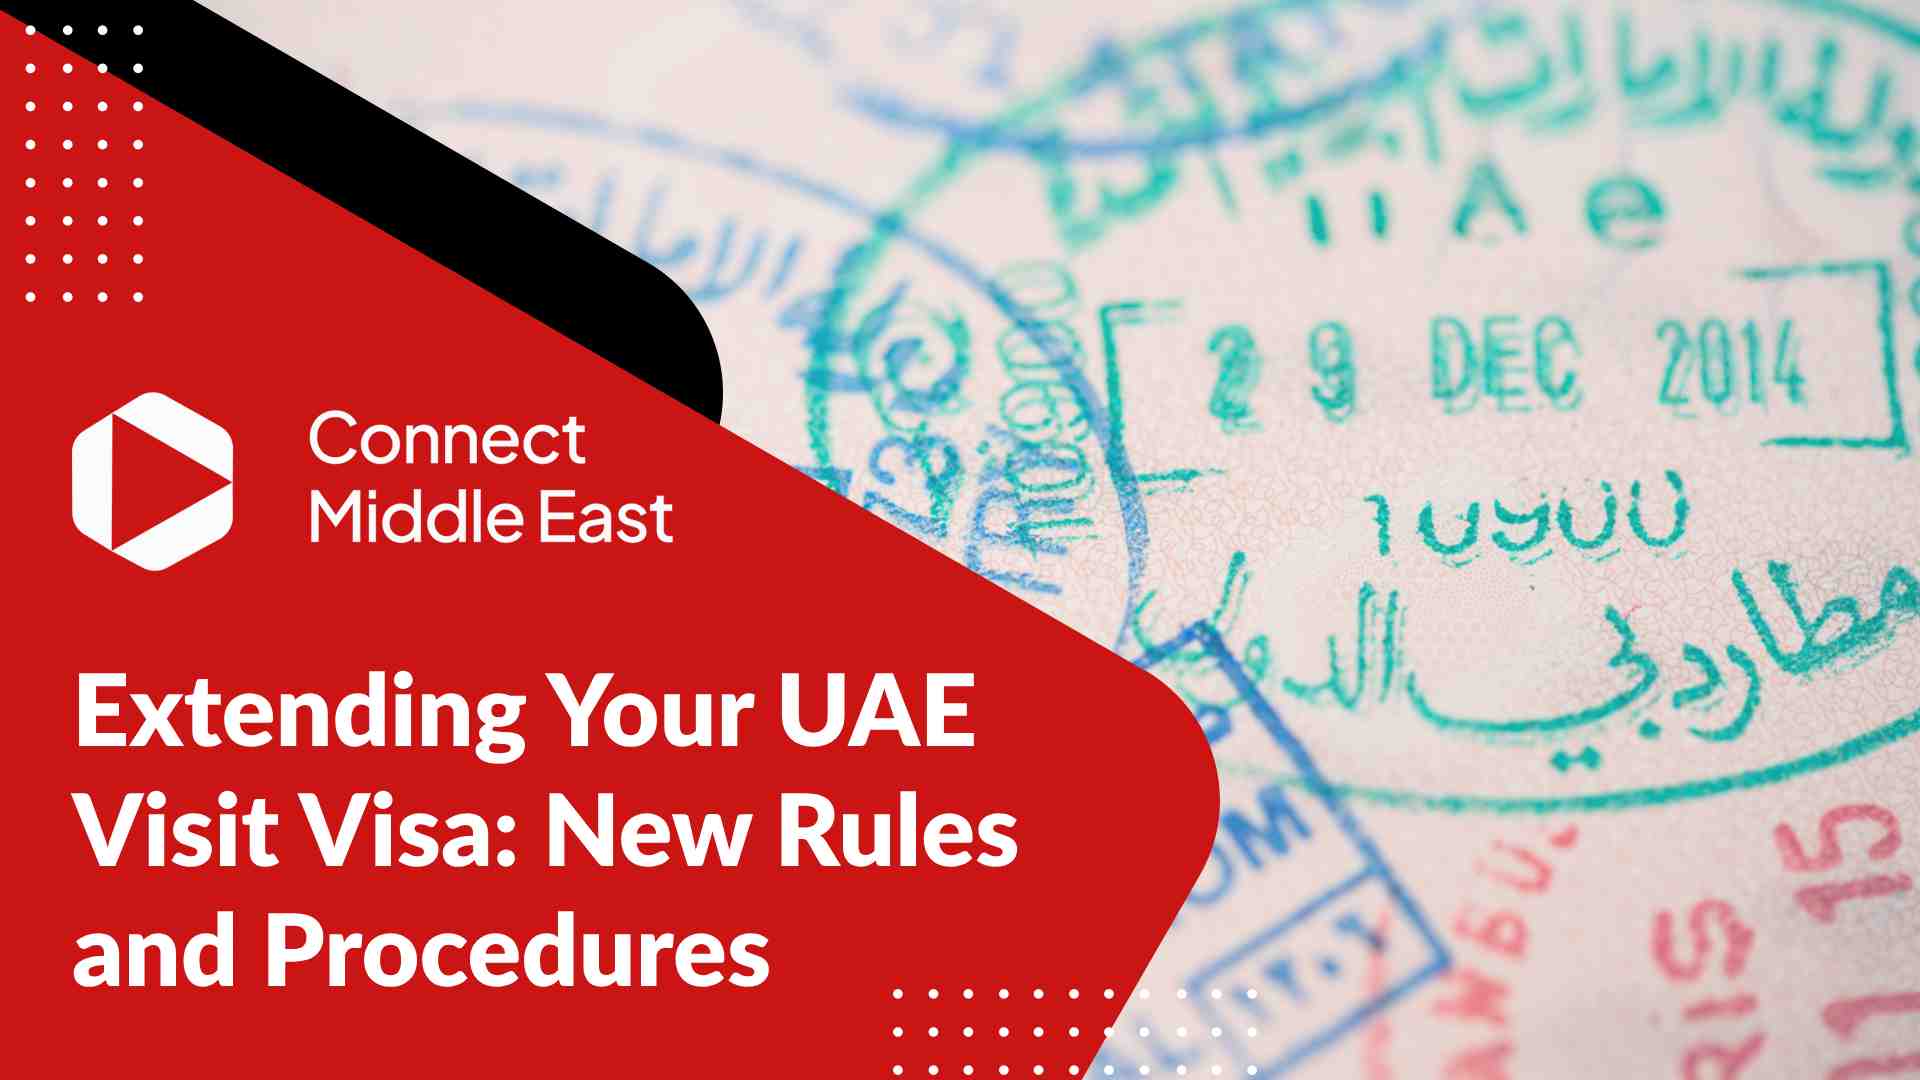 uae visit visa extension new rules